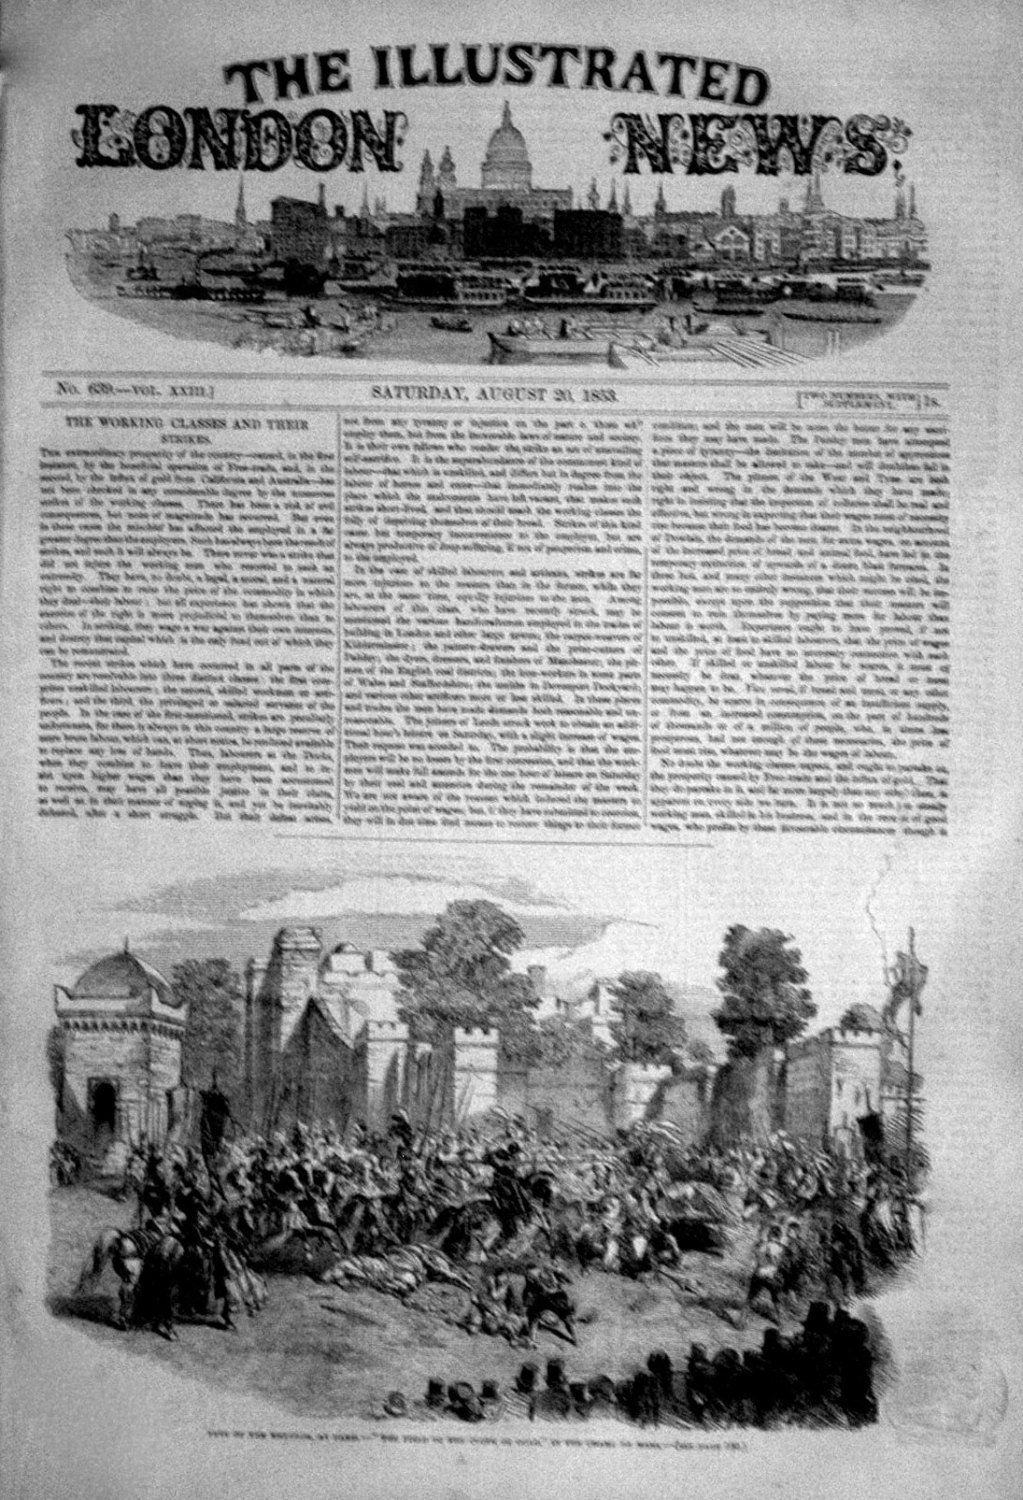 Illustrated London News Aug 20th 1853.